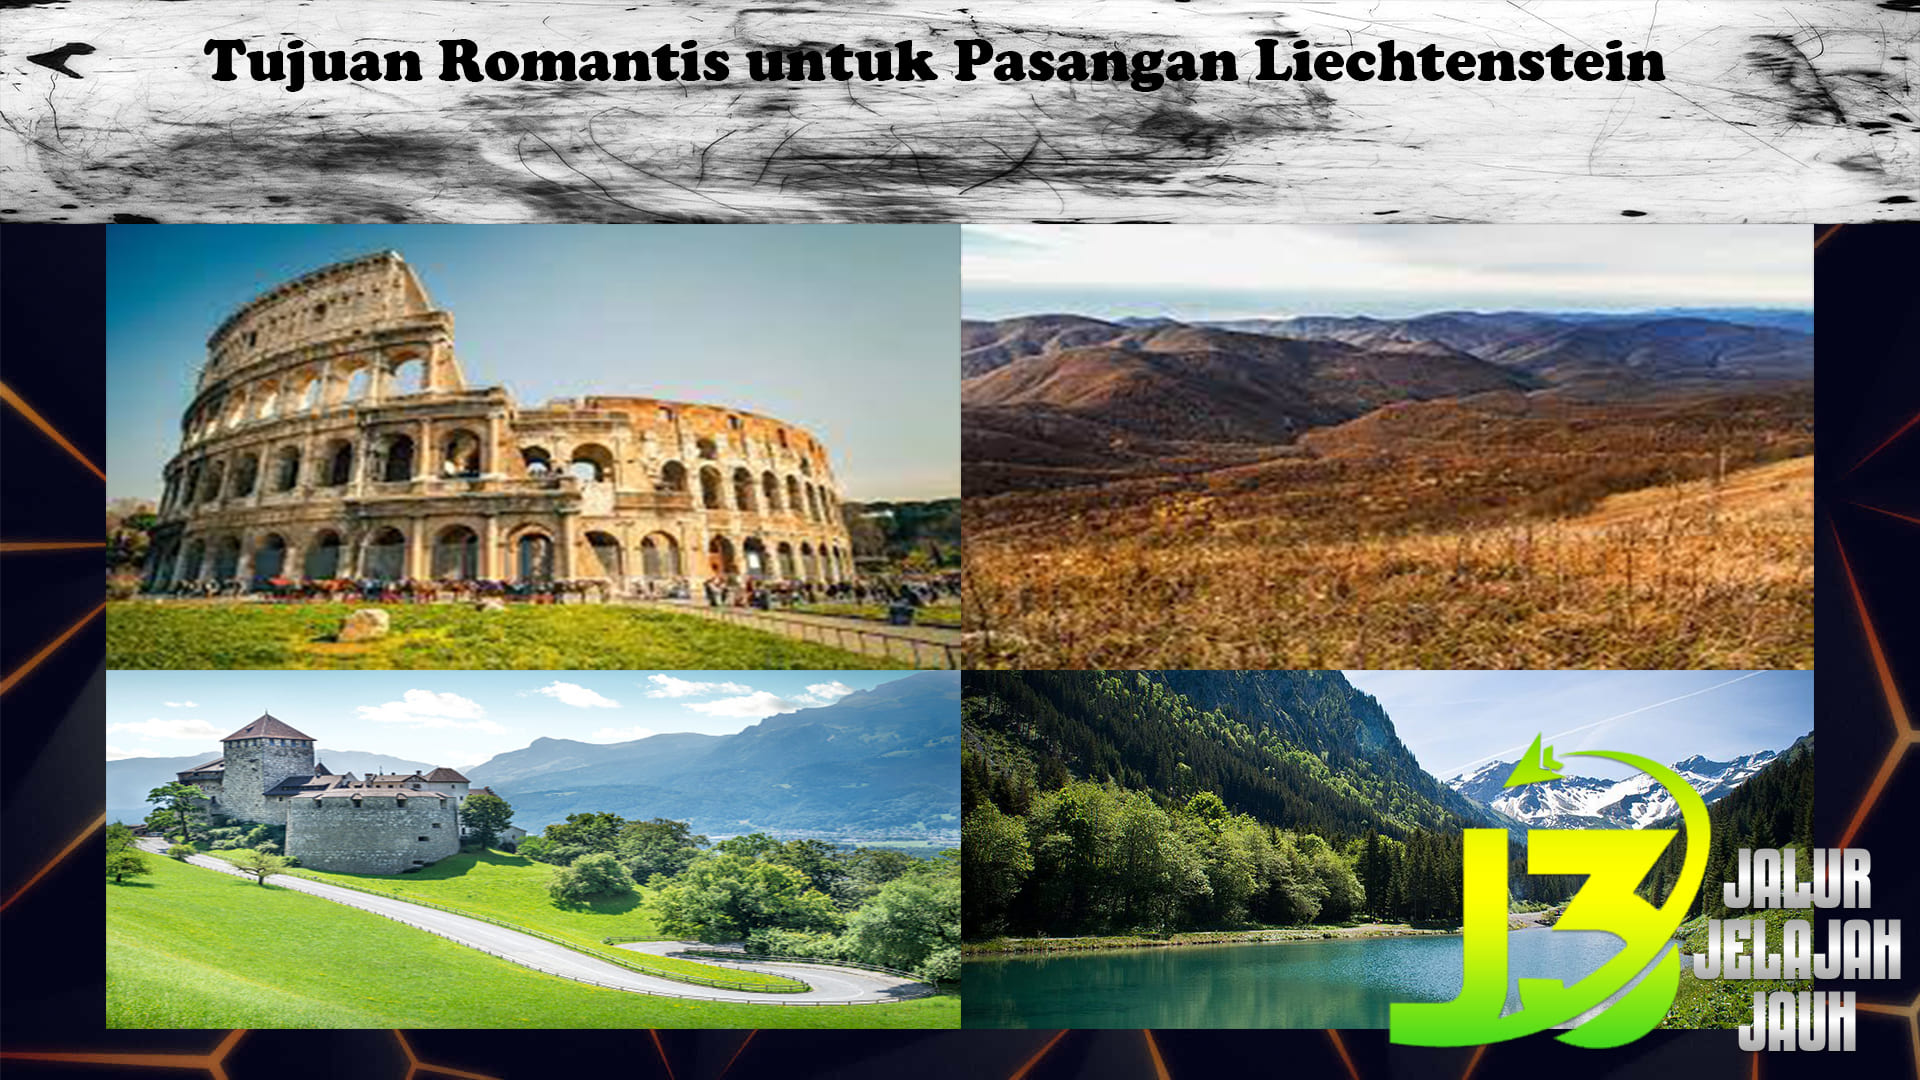 Tujuan Romantis untuk Pasangan Liechtenstein